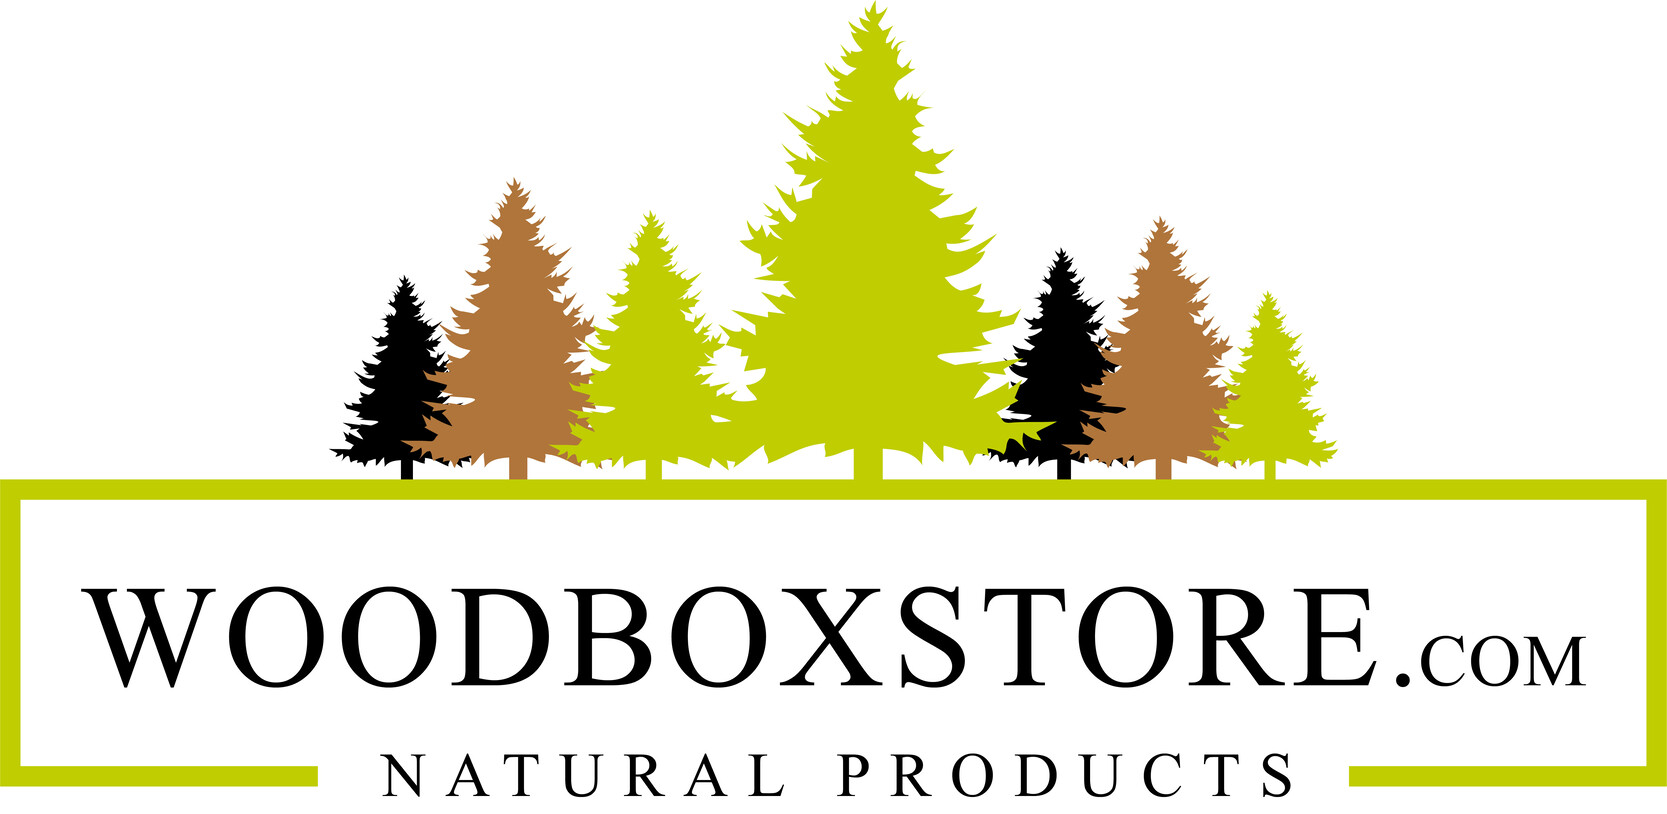 Woodboxstore.com